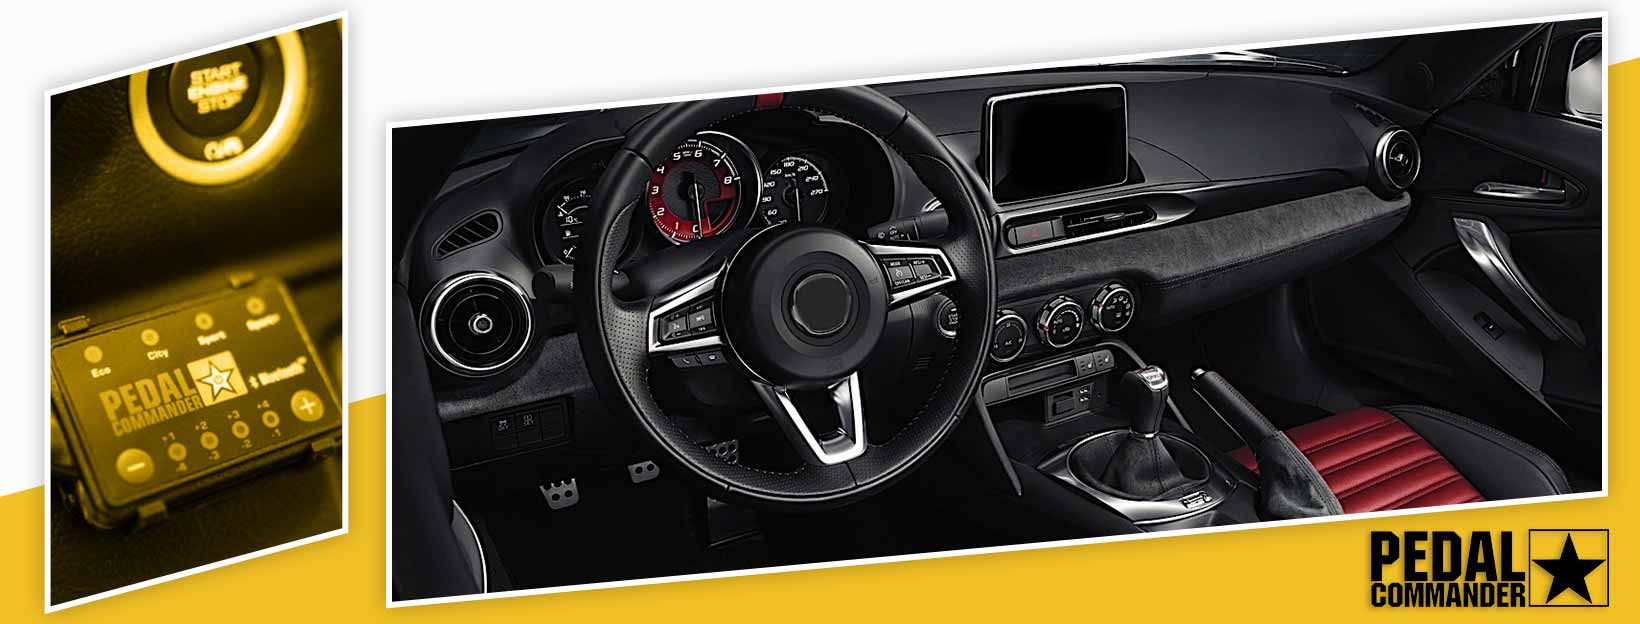 Pedal Commander for Fiat 124 Spider - interior